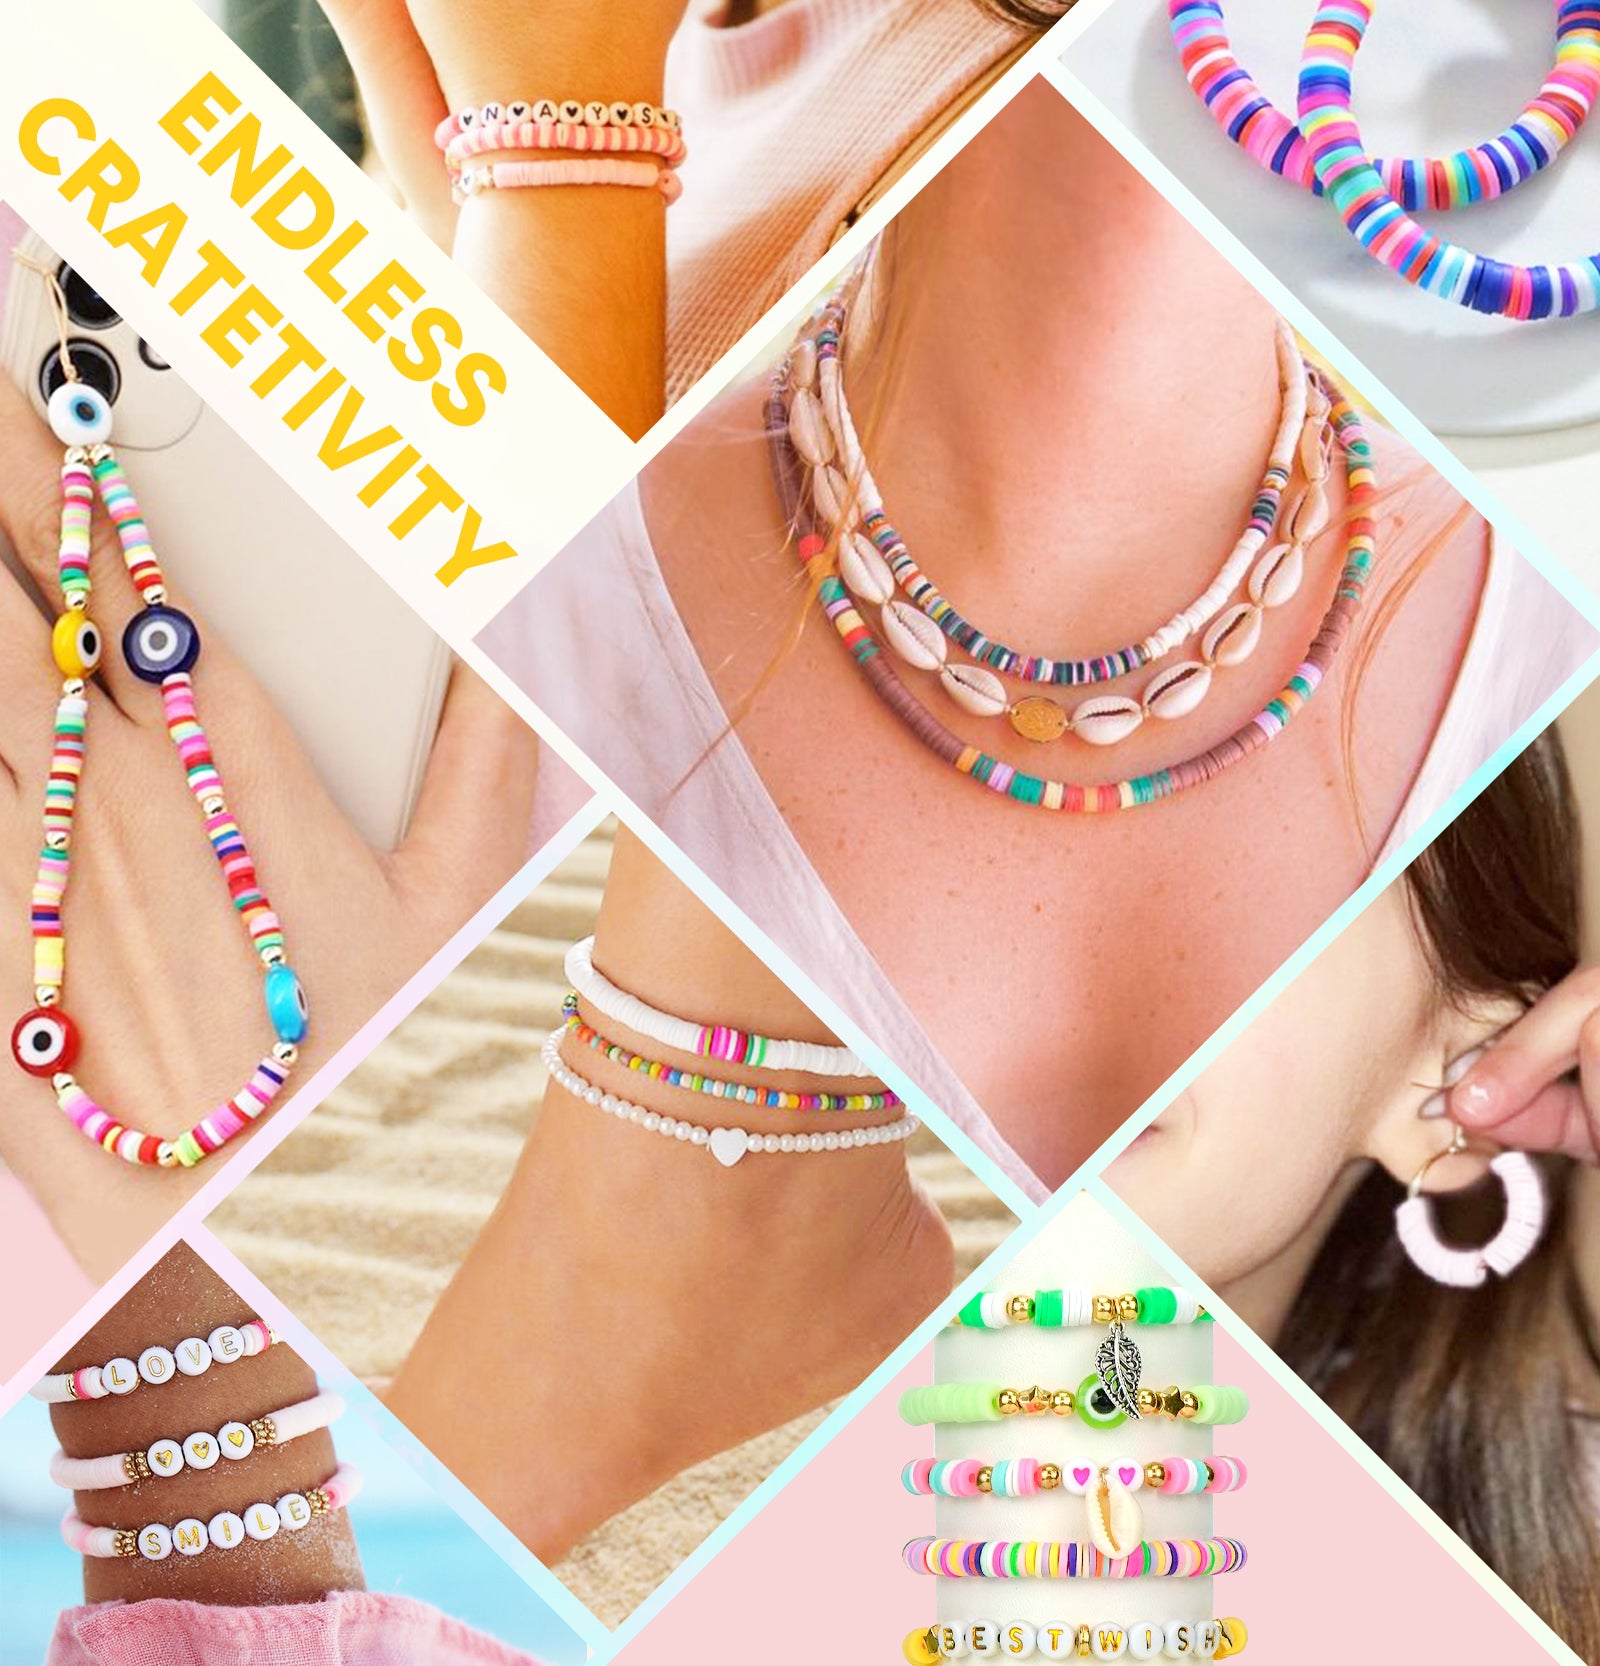 Dulzod 4800Pcs Clay Beads for Jewelry Making Bracelet Kit,Flat